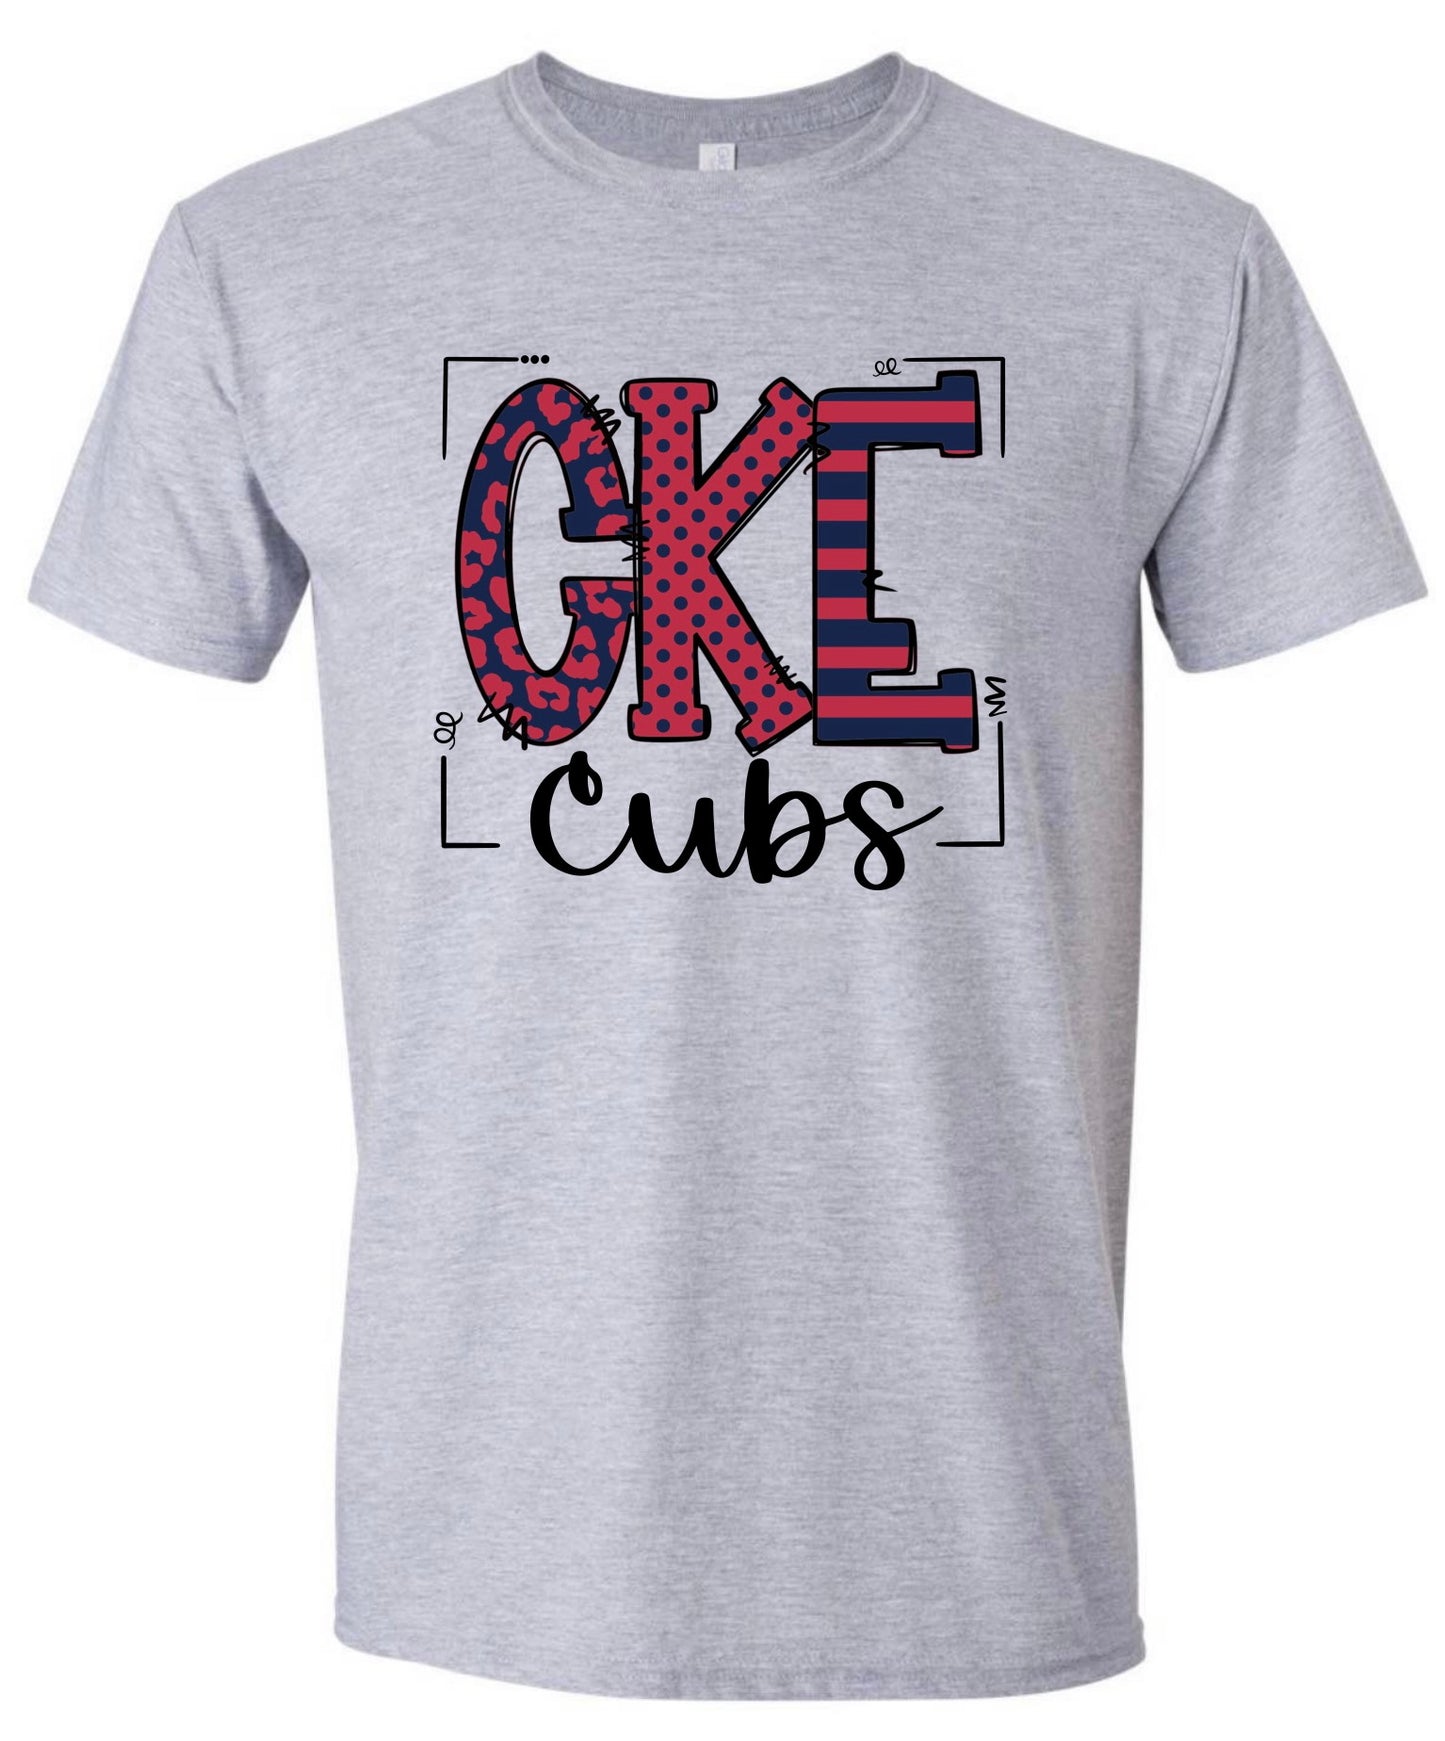 CKE Cubs Tshirt